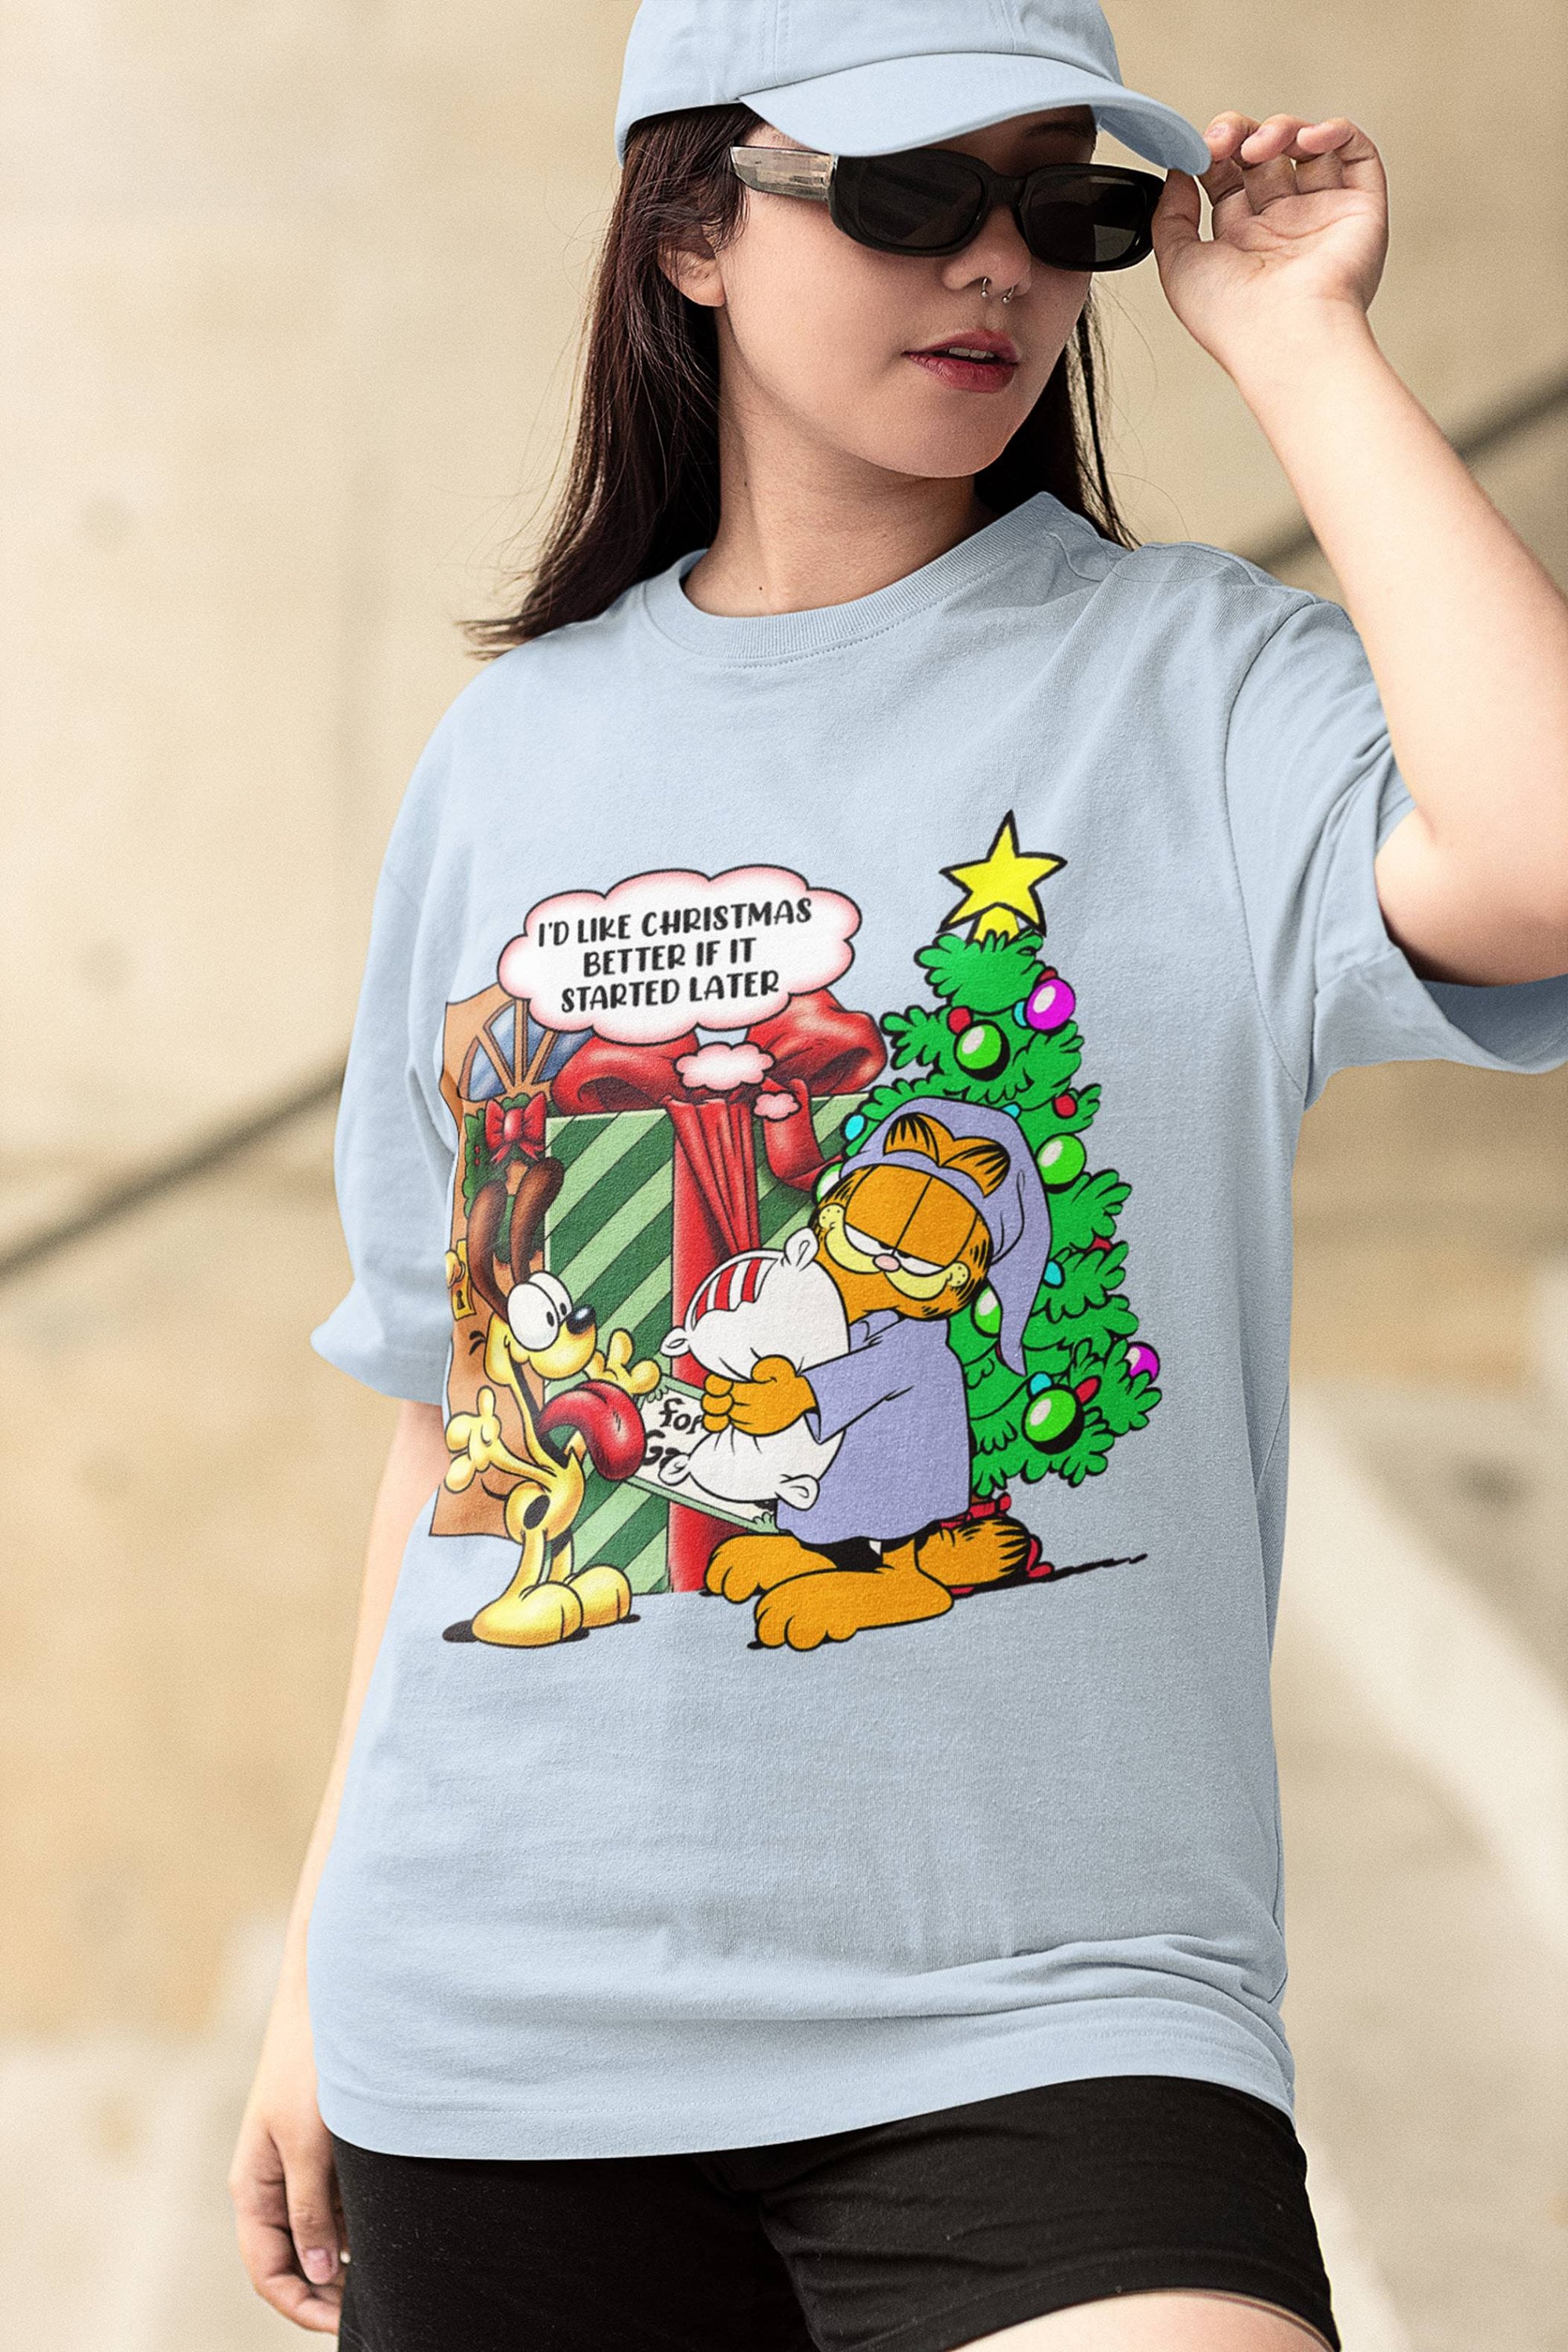 Garfield the Cat Shirt Have A Holly Jolly Christmas Shirt 